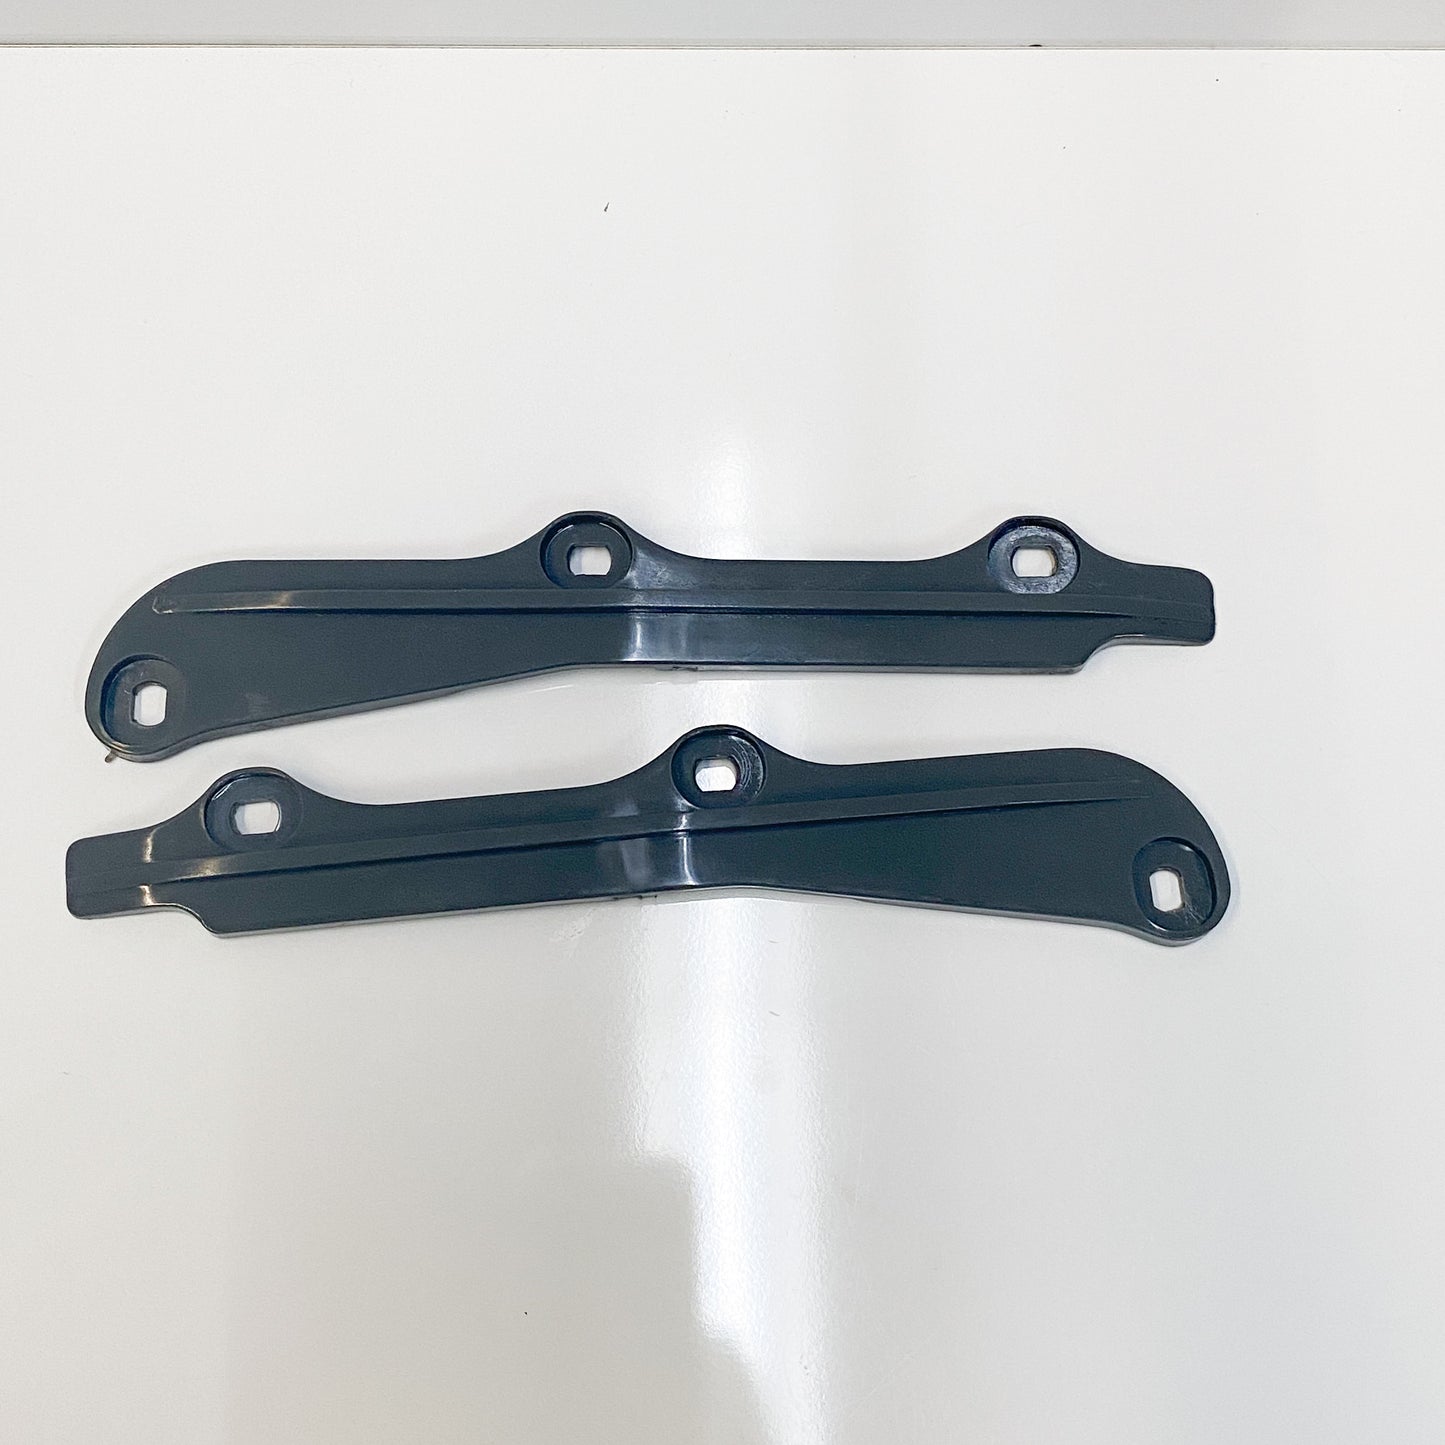 Ducati OEM Upper-Low Chain Sliders Set 69923731A